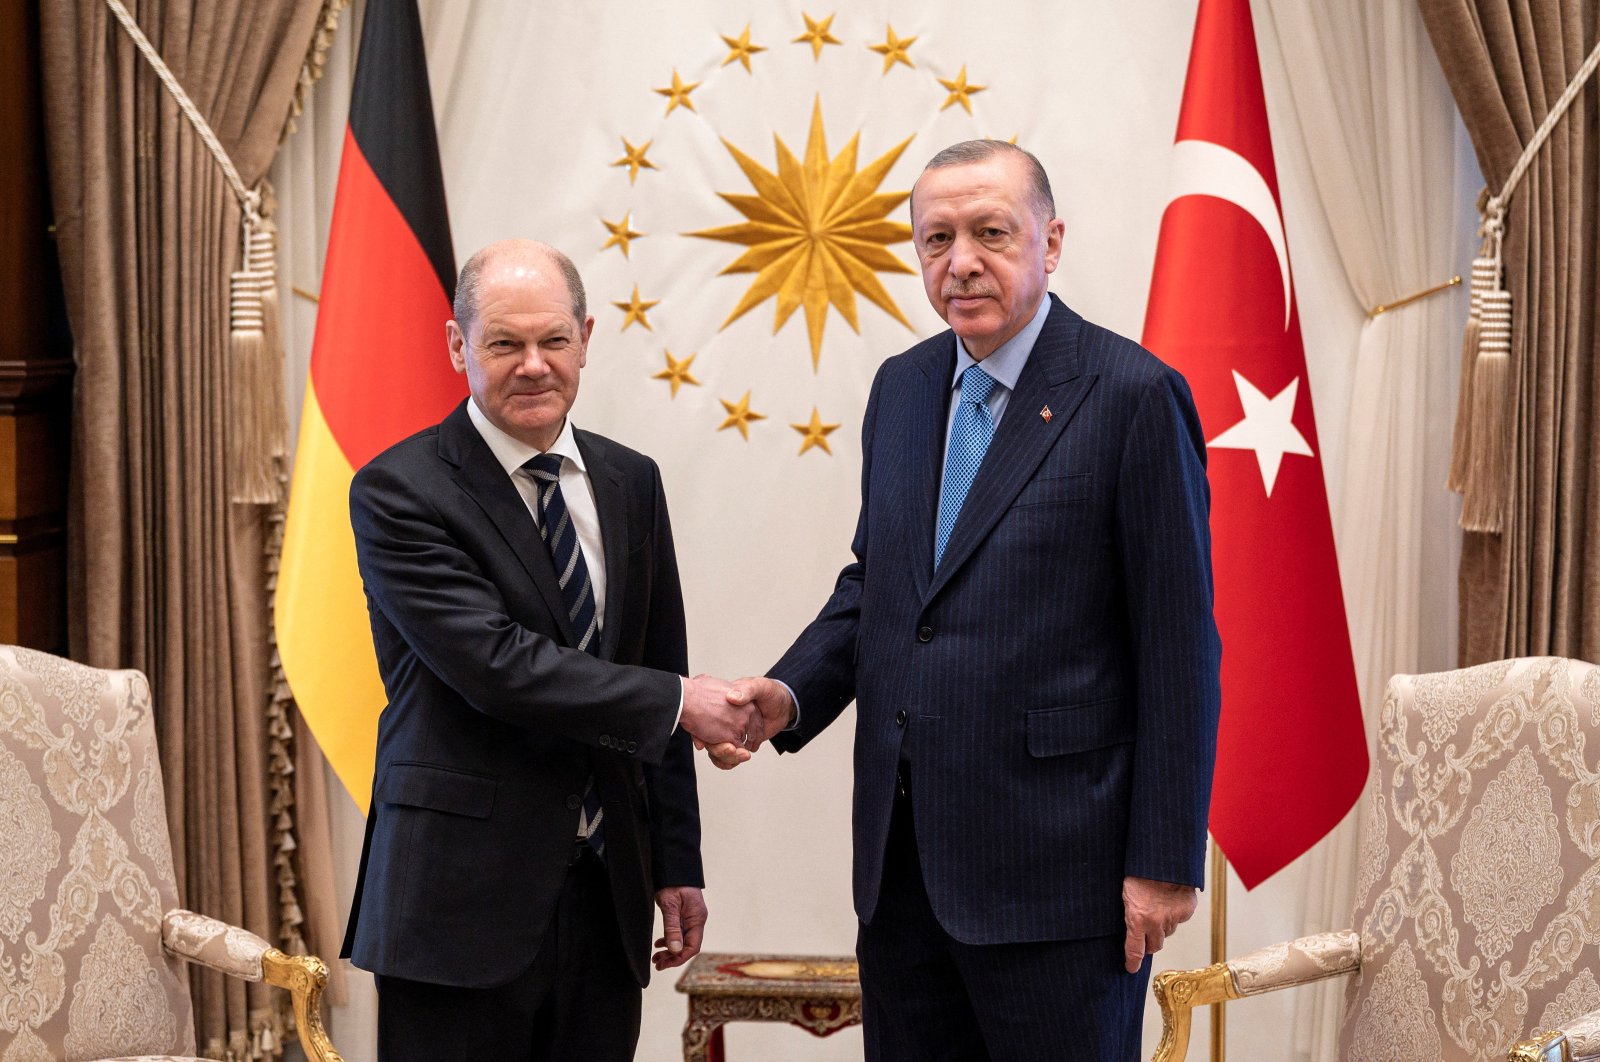 German Chancellor Olaf Scholz meets with President Recep Tayyip Erdoğan in Ankara, Turkey, March 14, 2022. (Reuters Photo)